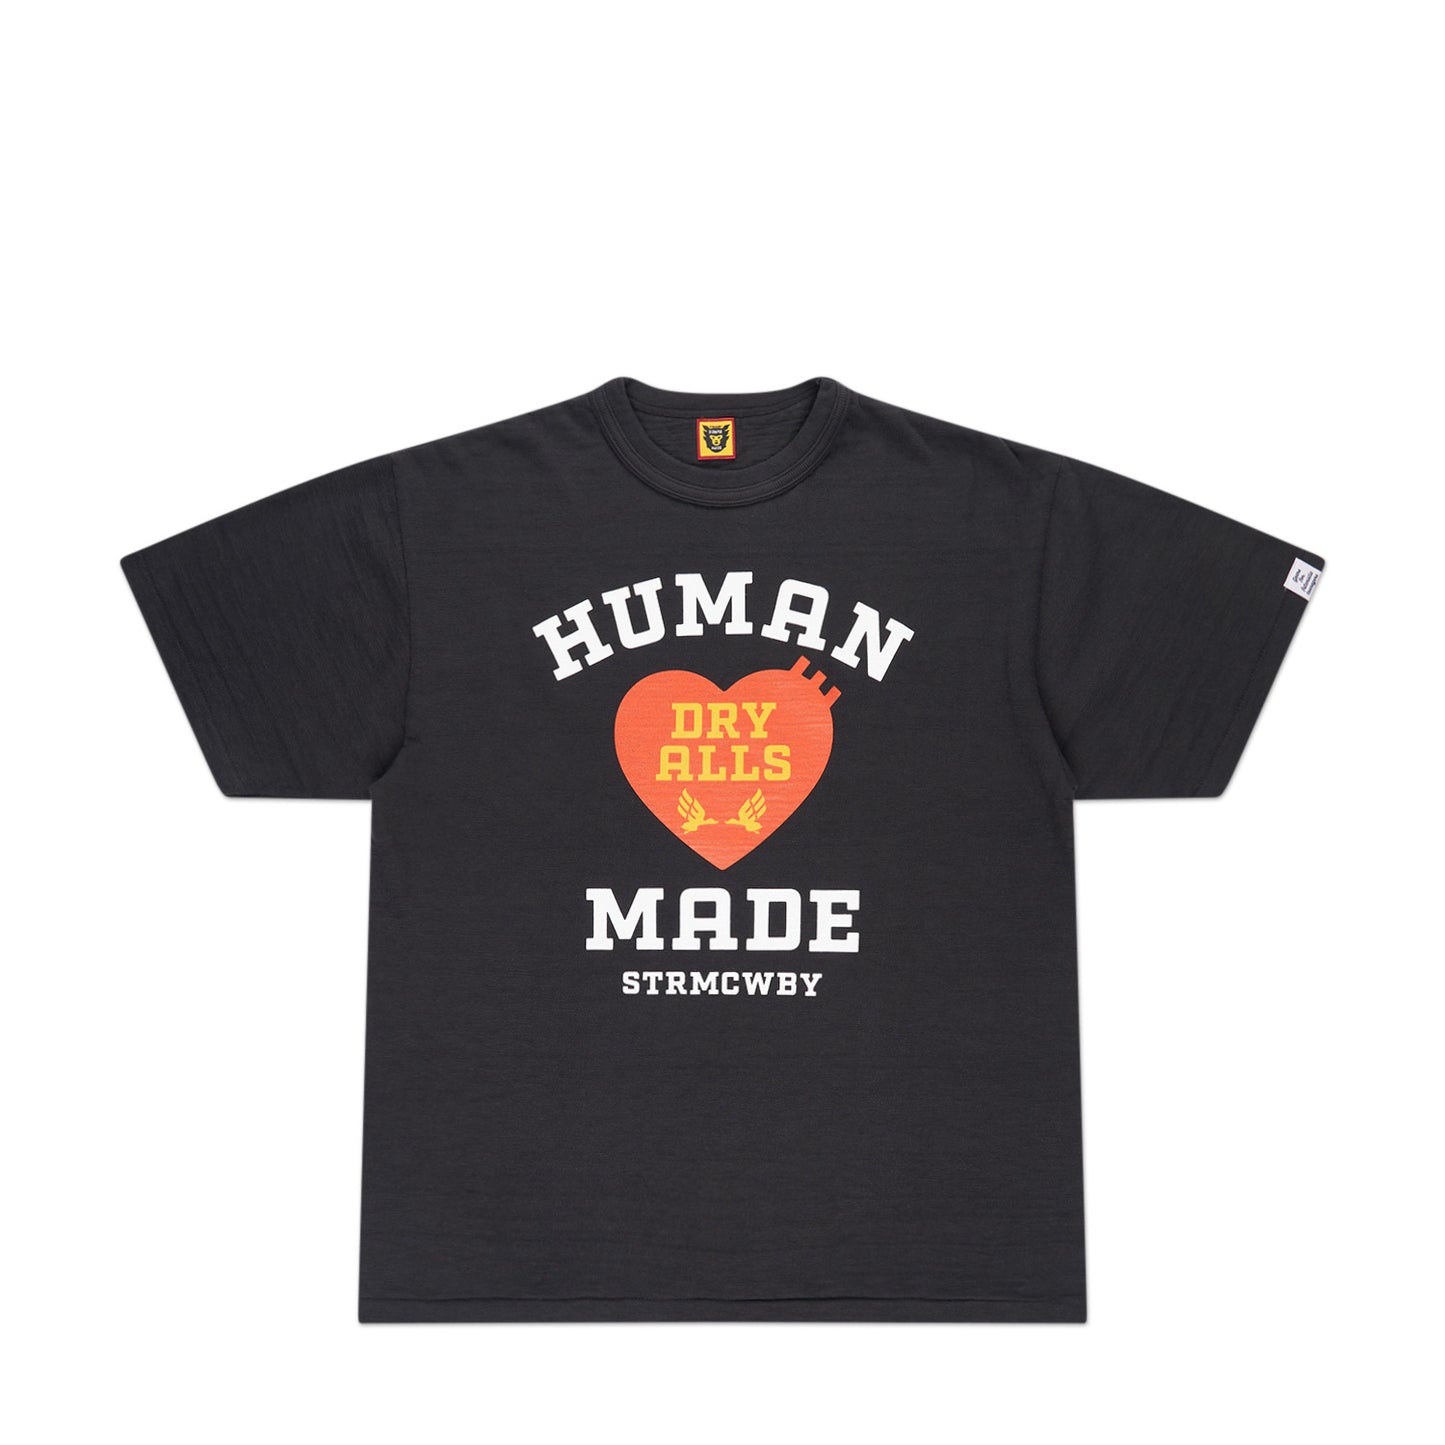 human made graphic t-shirt #08 (schwarz)